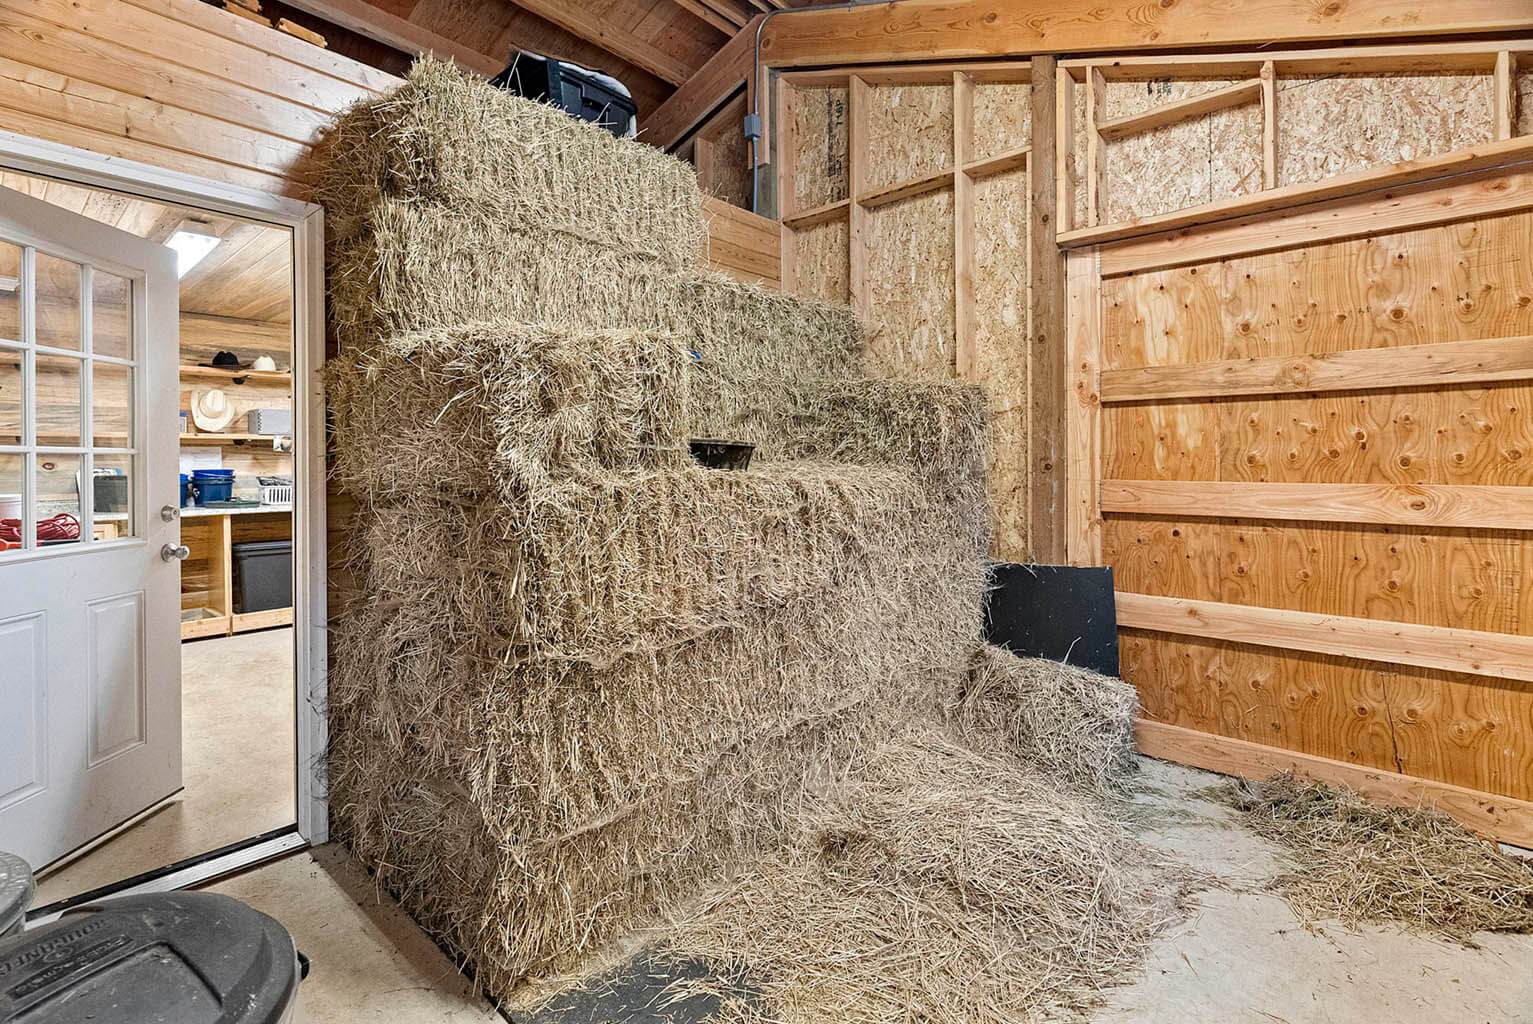 Three tons of hay storage